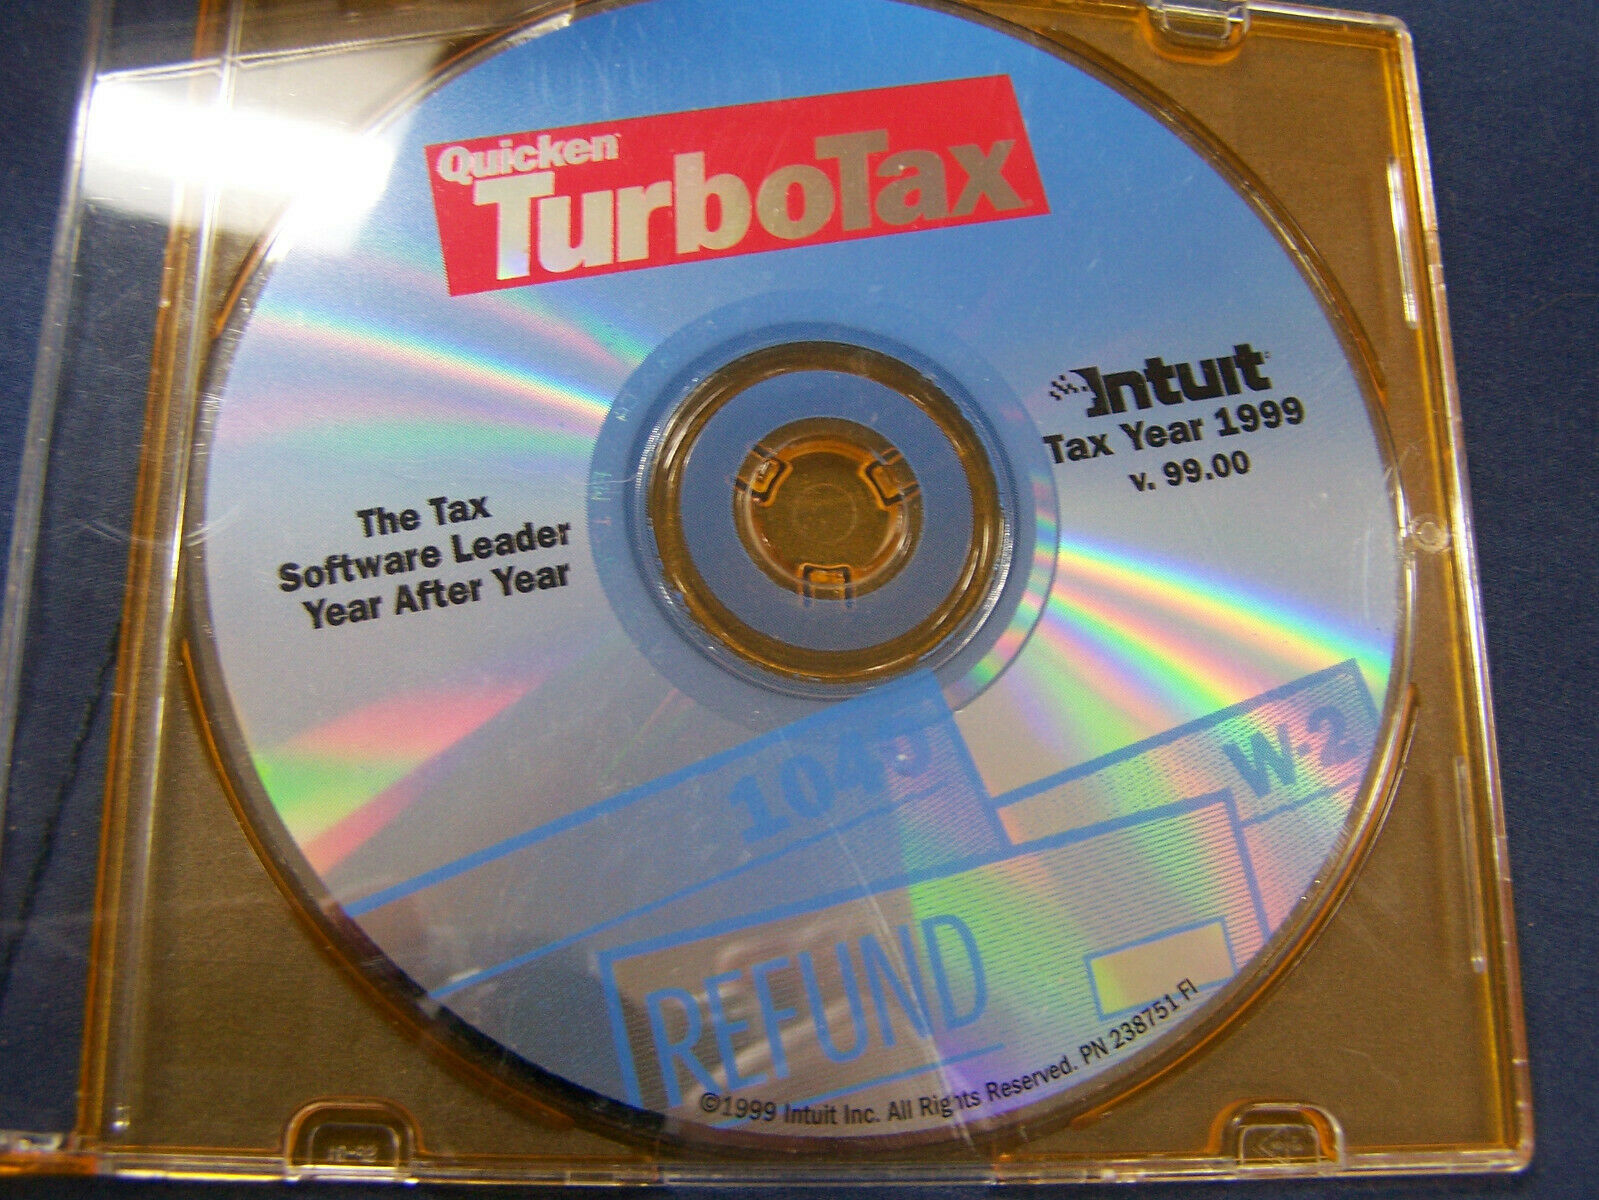 Turbotax tax year 1999 v 99.00 Quicken Intuit - $14.84